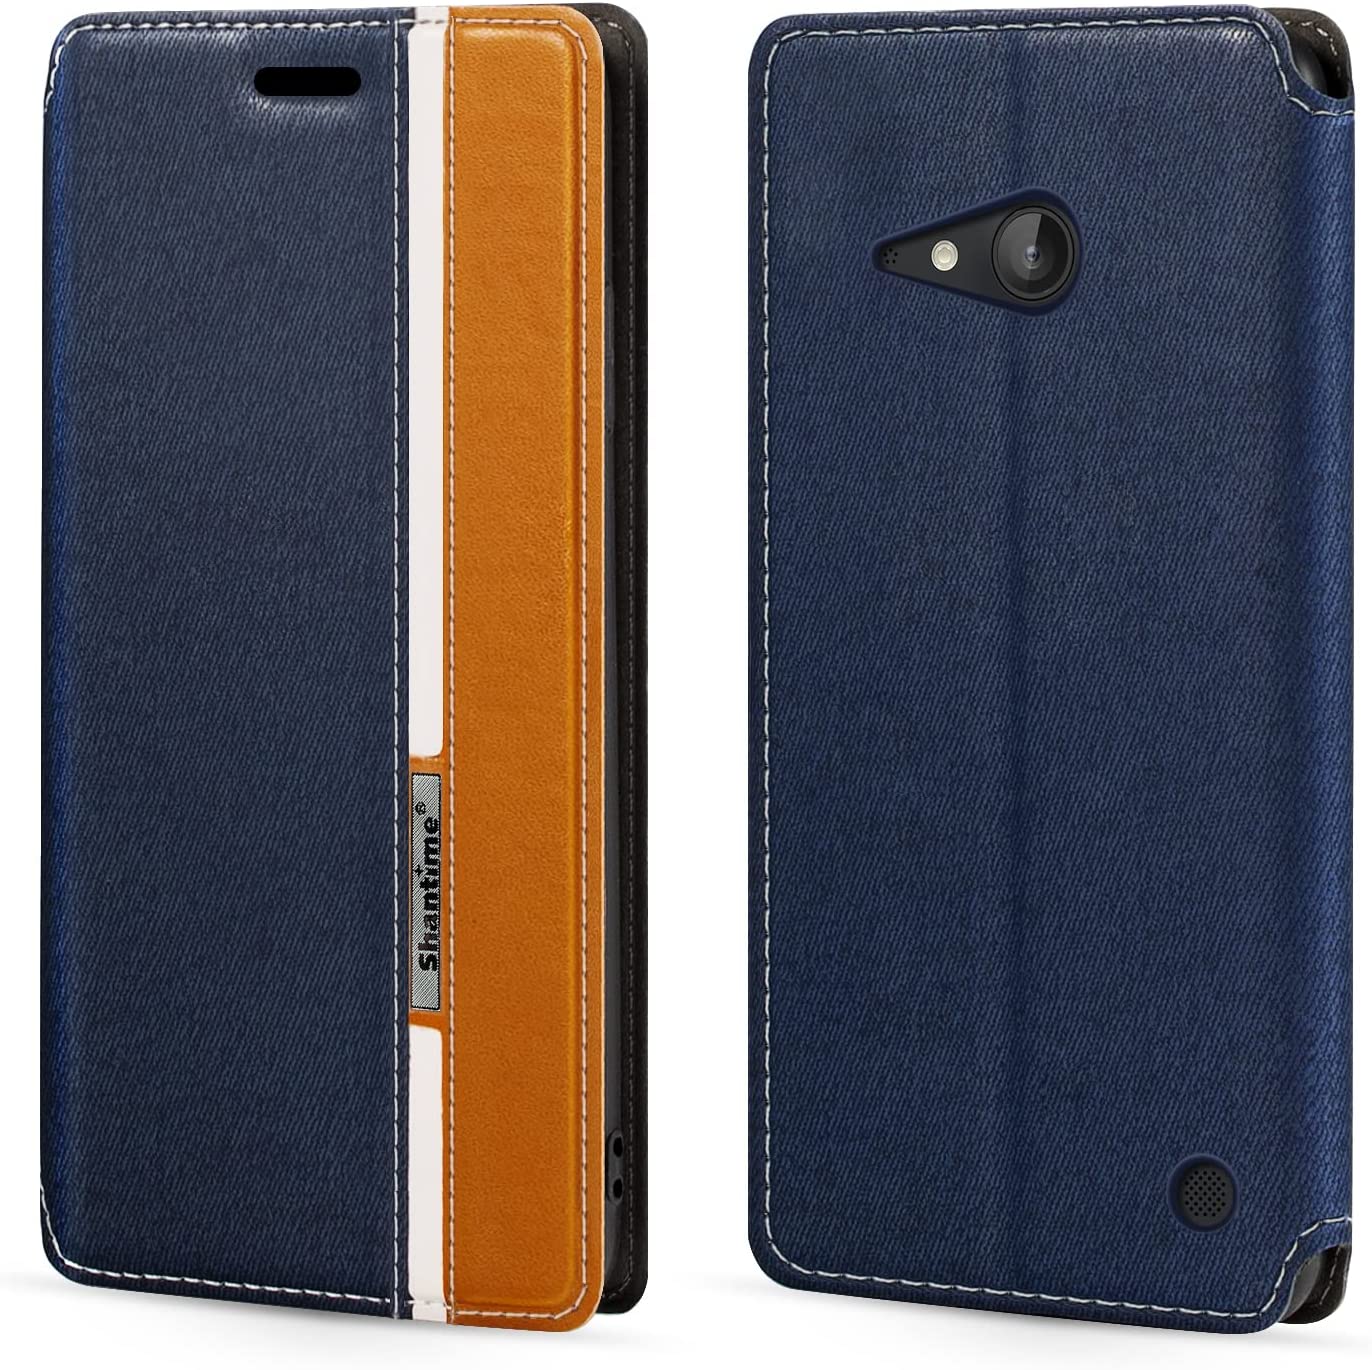 Nokia Lumia 730 Case, Fashion Multicolor Magnetic Closure Leather Flip Case Cover with Card Holder f